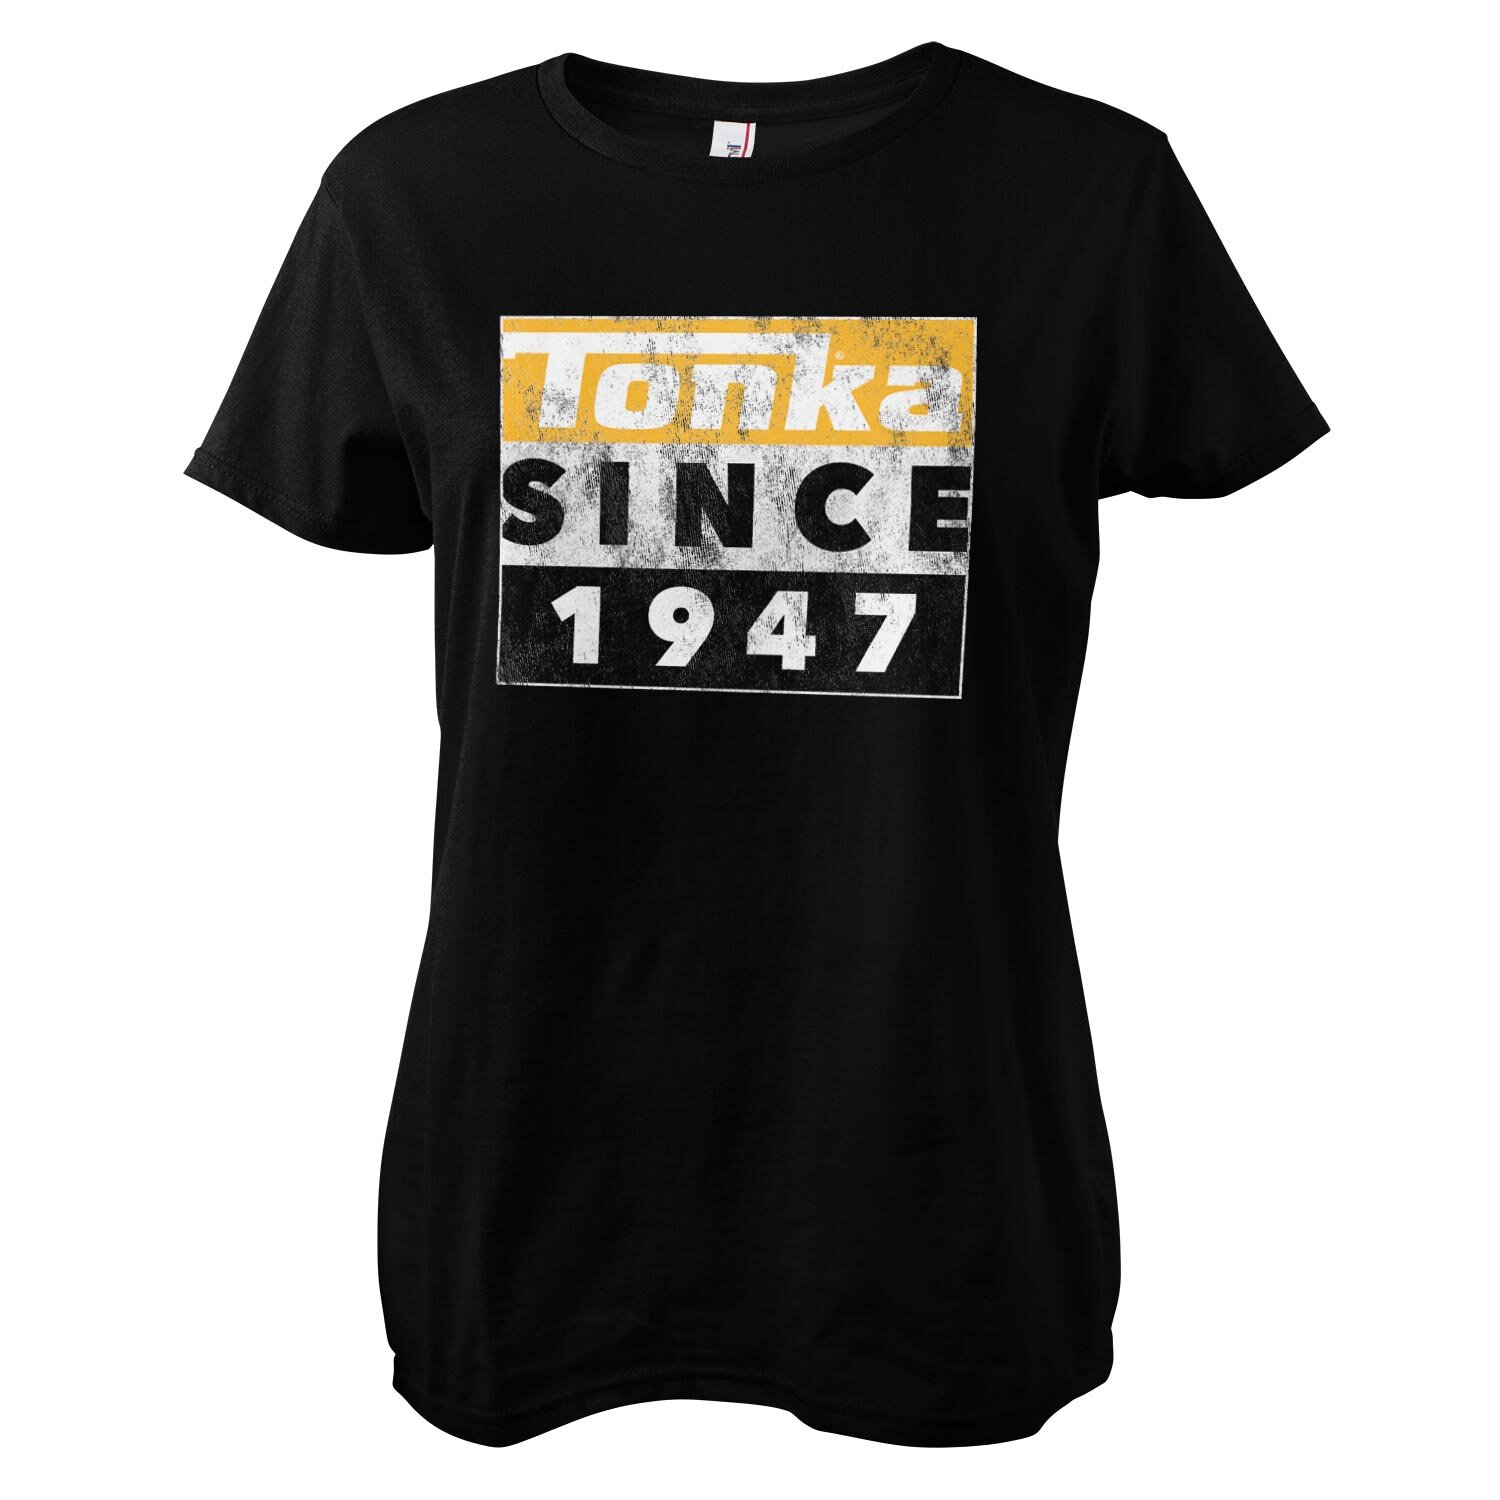 Tonka Since 1947 Girly Tee